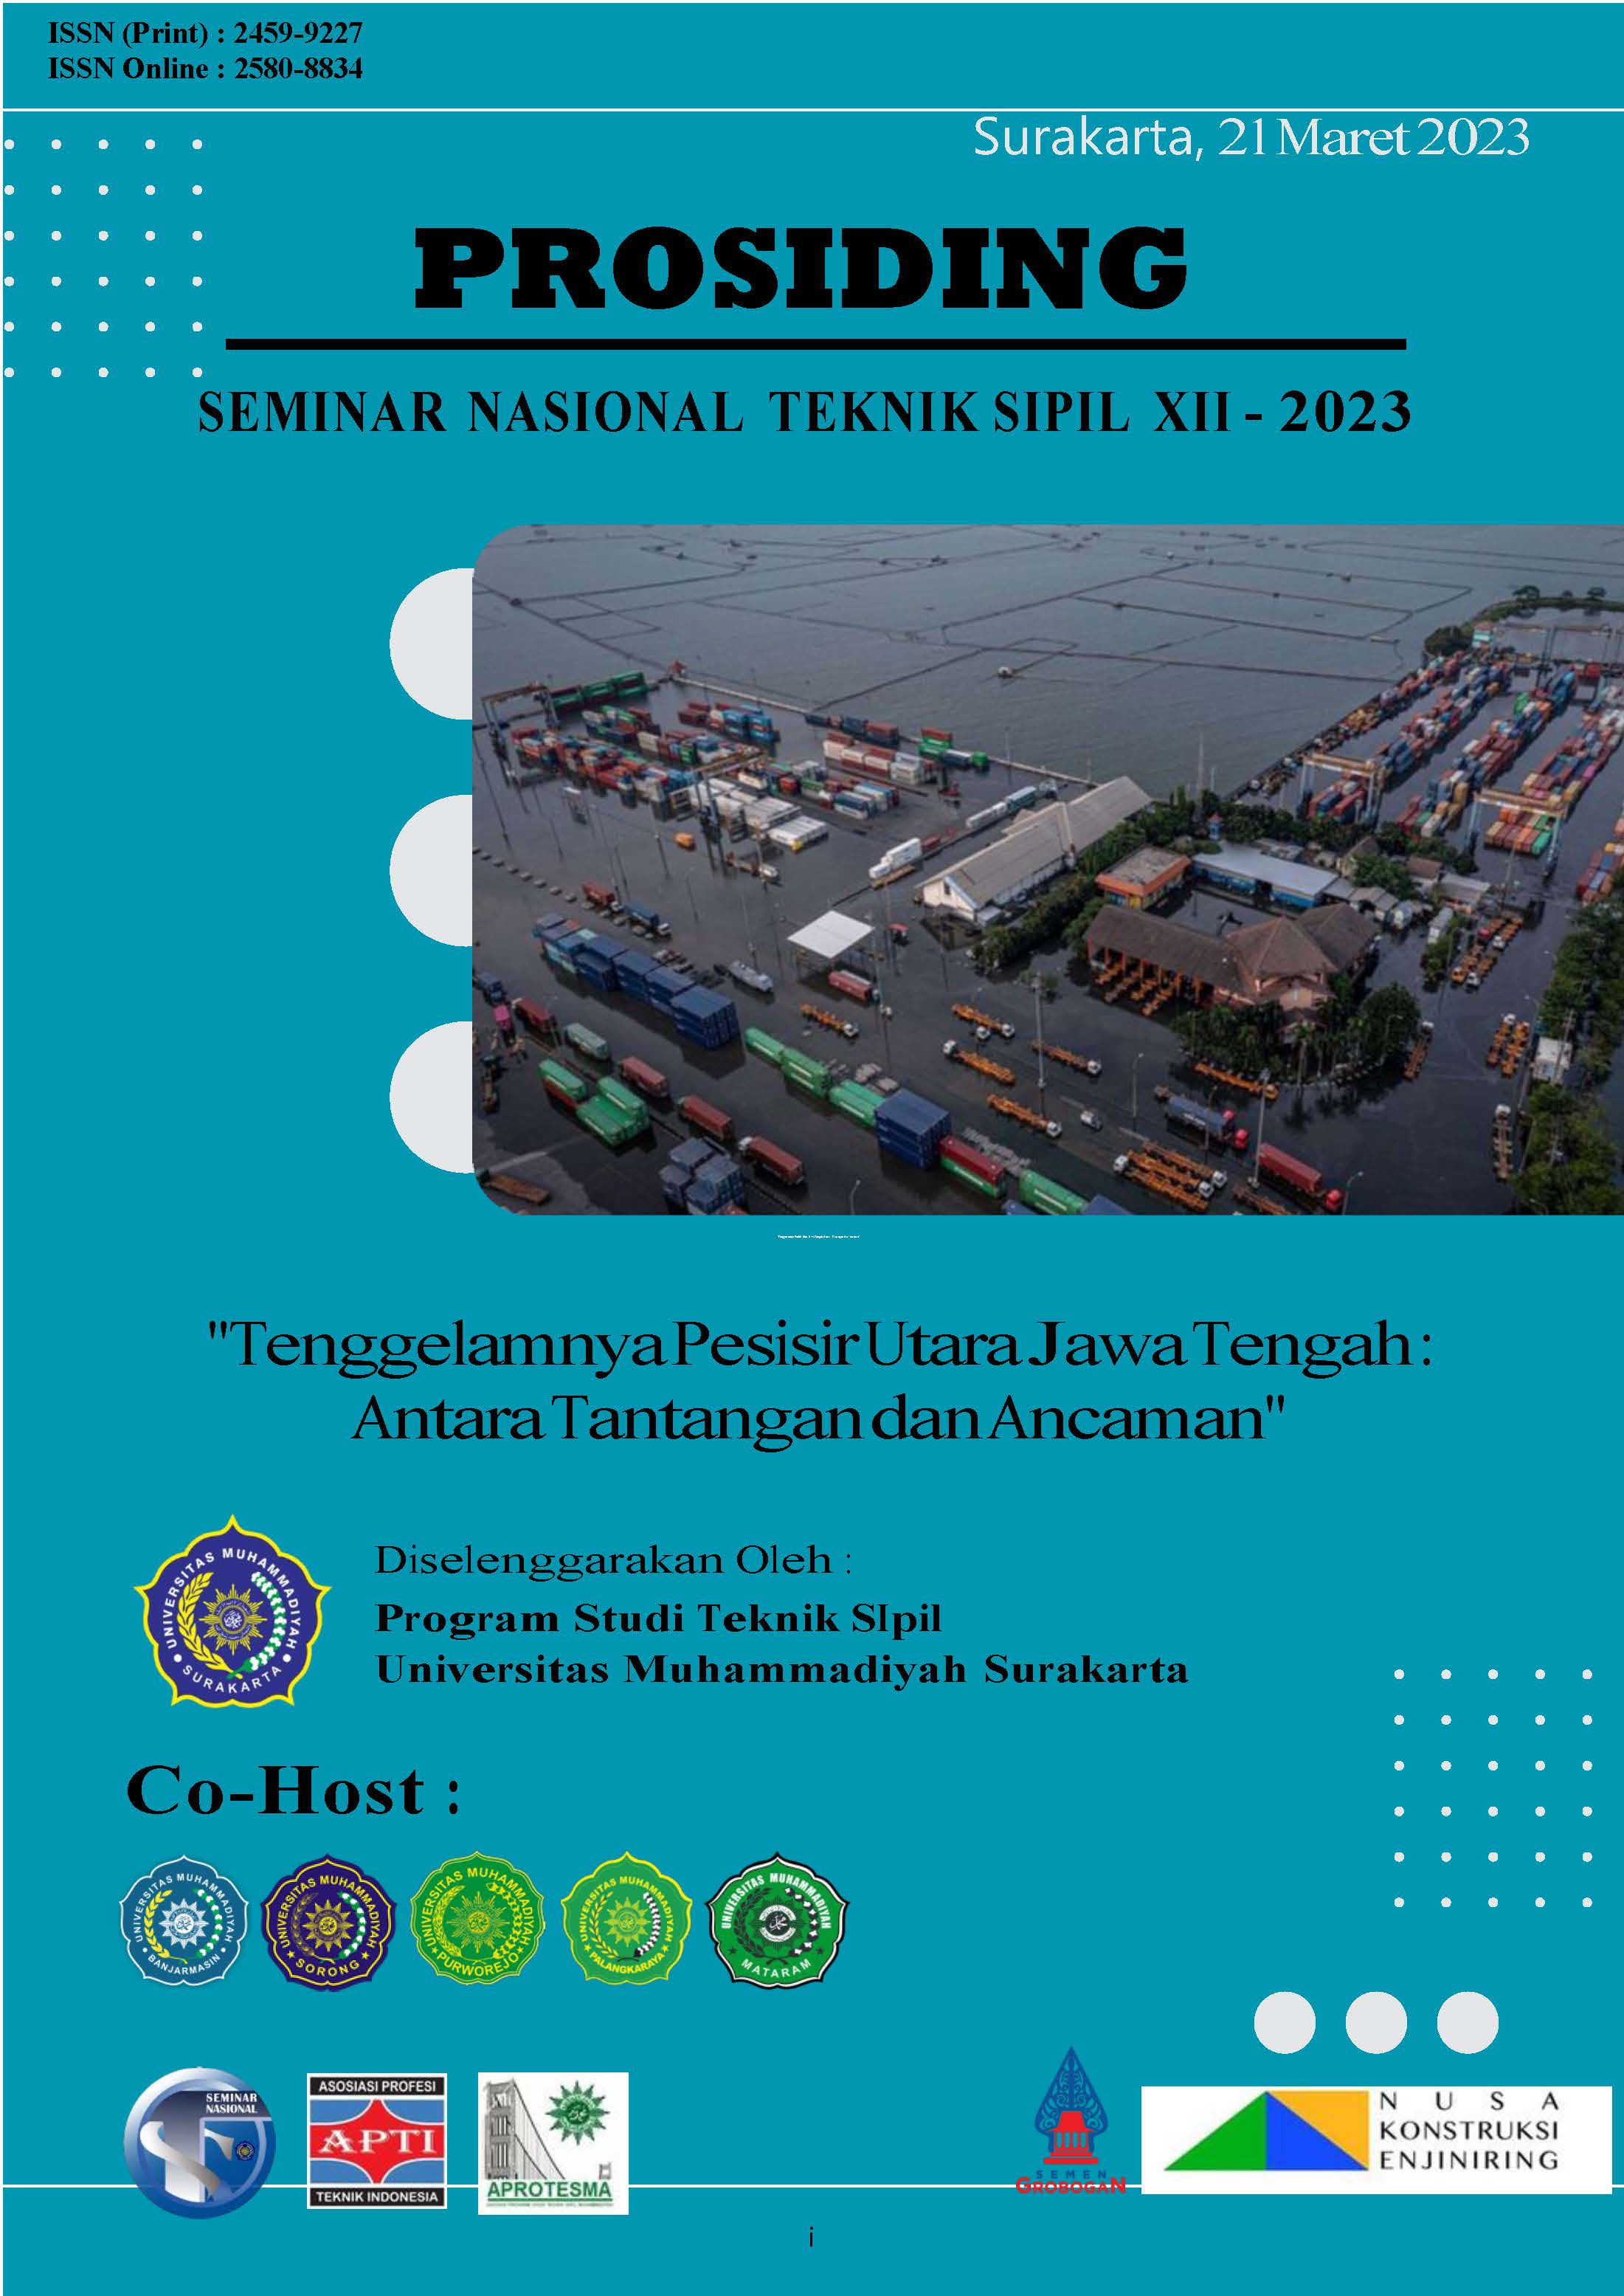 					View 2023: Prosiding Seminar Nasional Teknik Sipil UMS
				